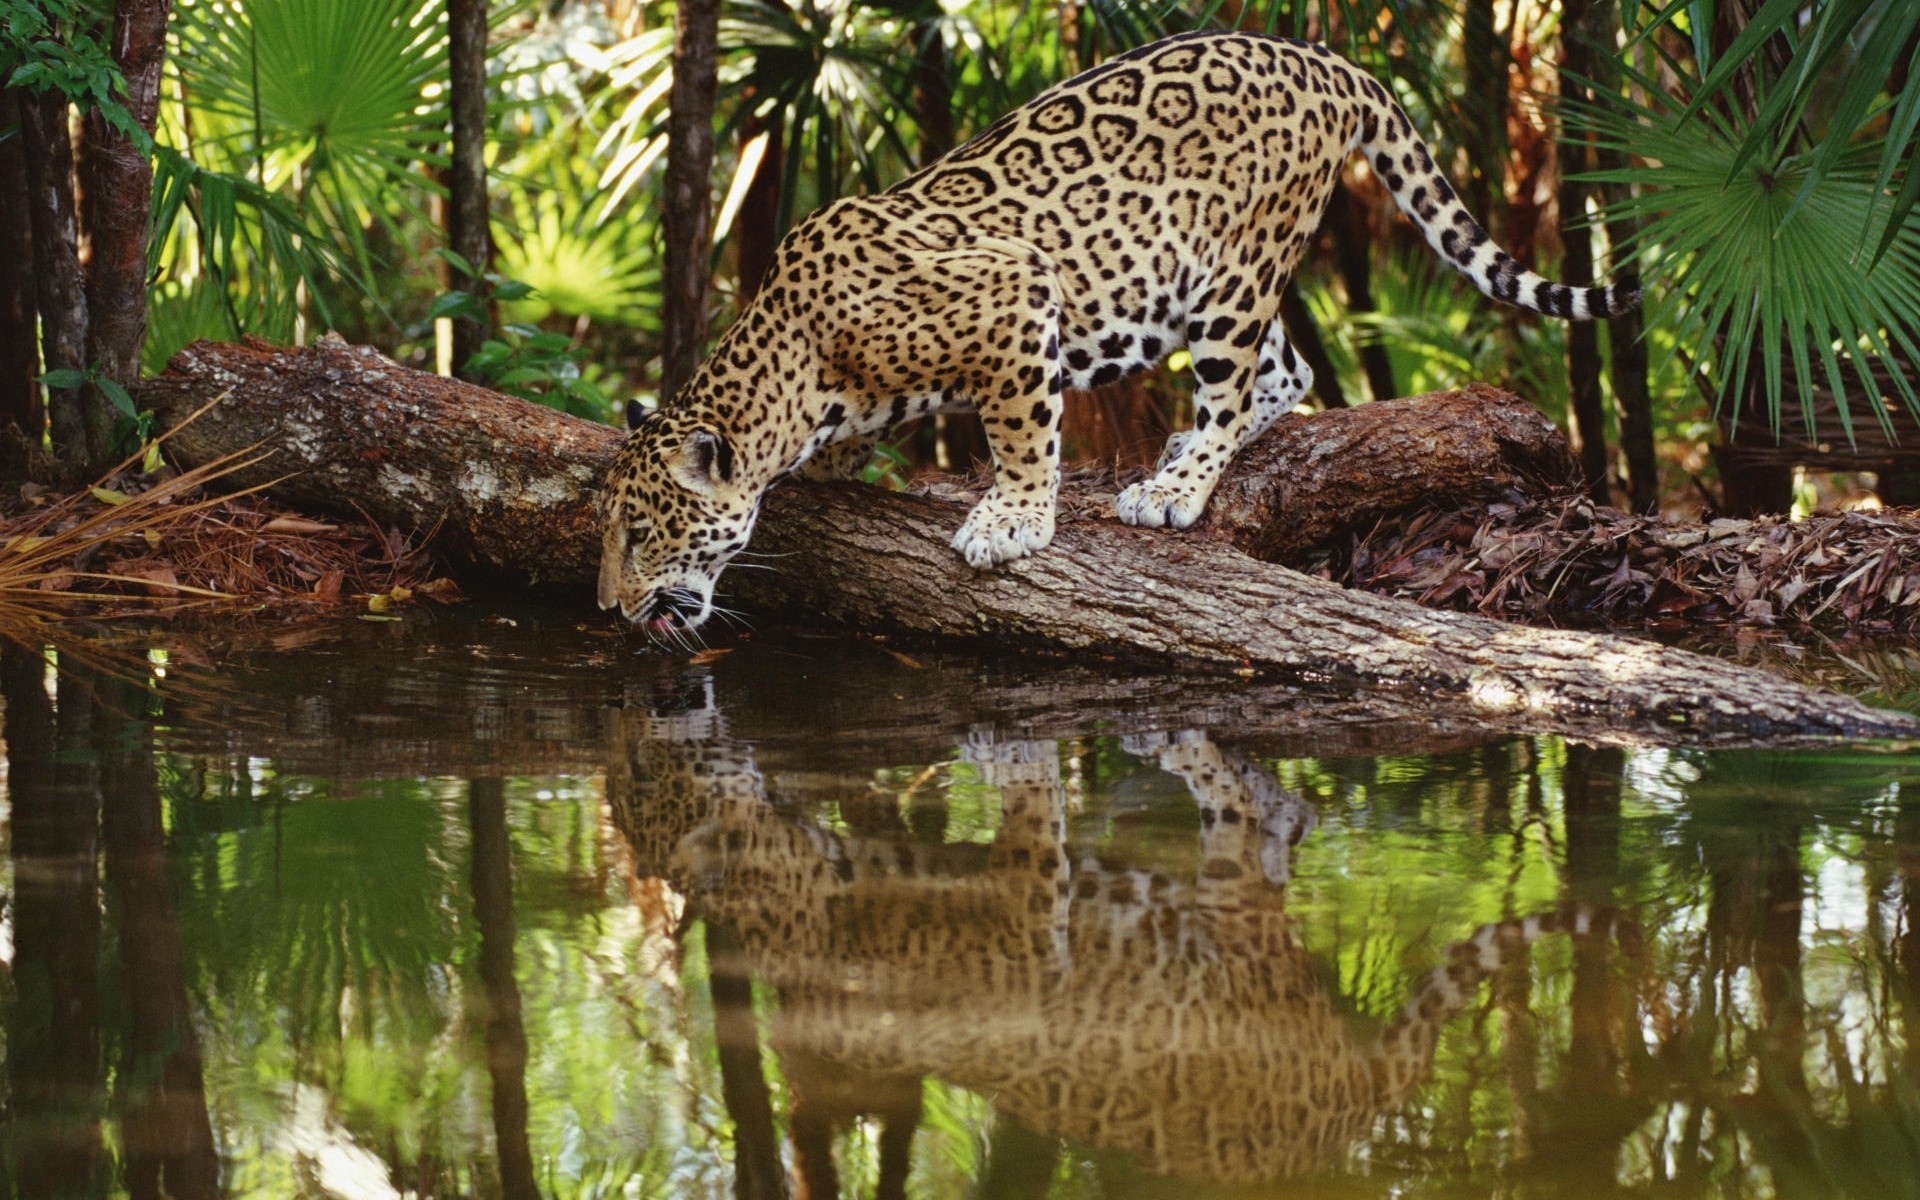 HD Animal Wallpapers Wild Cat Leopard Drinking Water in Jungle HD Animal Wallpapers. Wild Cat Leopard Drinking Water in Jungle HD Animal Wallpapers